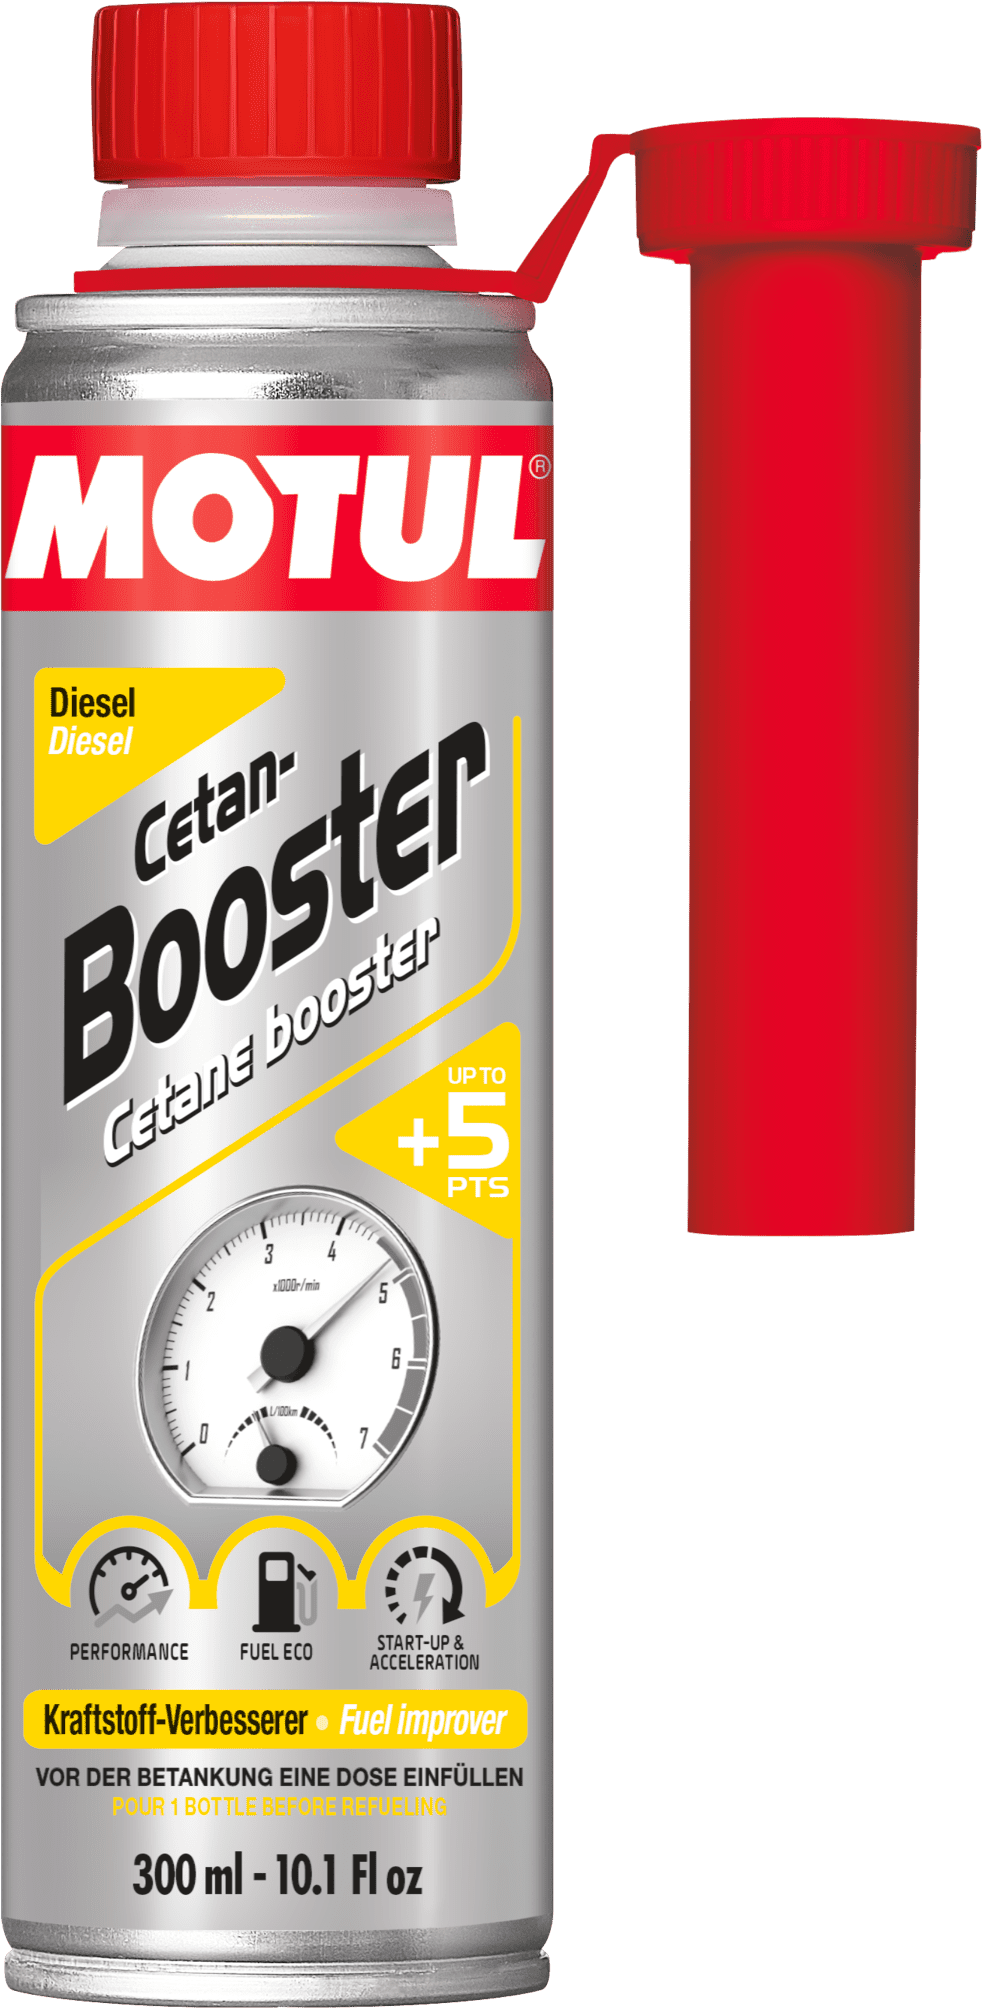 Motul Cetane Booster Diesel, 300 ml